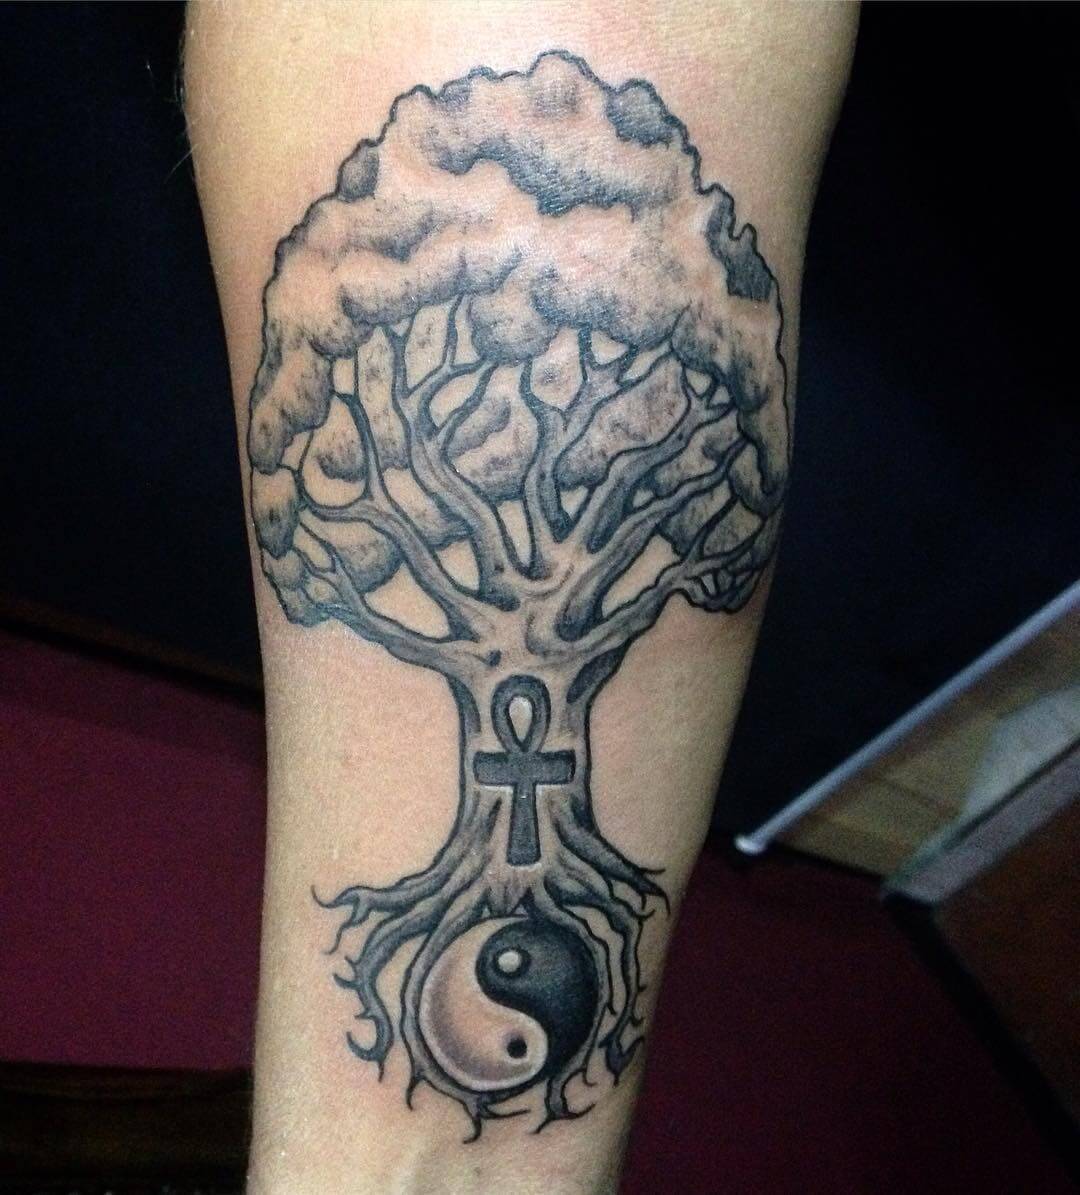 ankh tattoo on arm